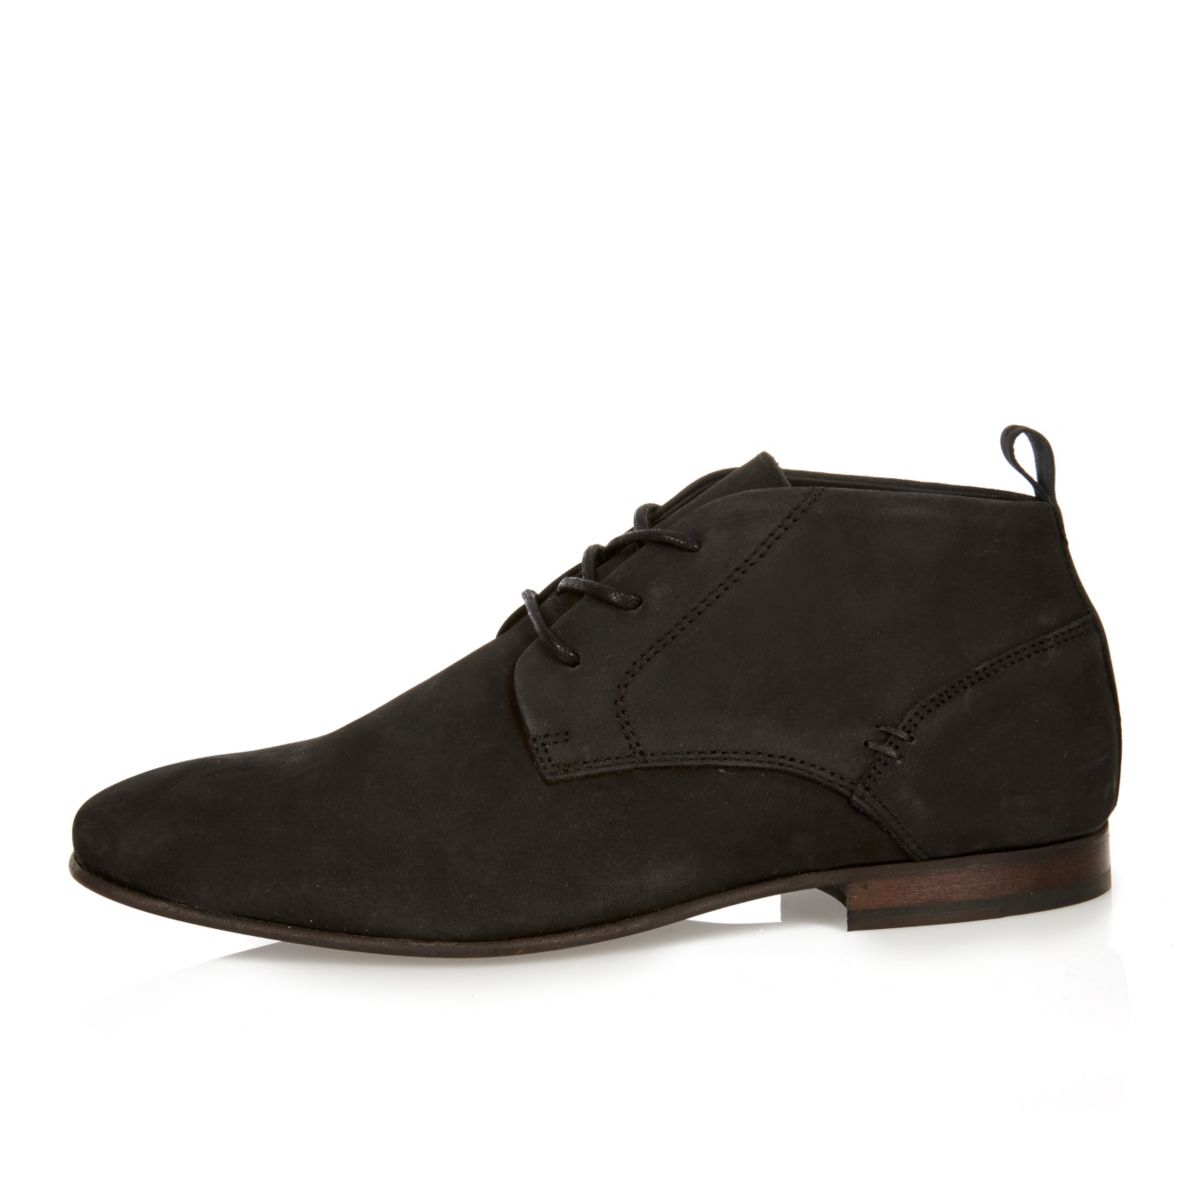 Black suede chukka boots - Shoes & Boots - Sale - men